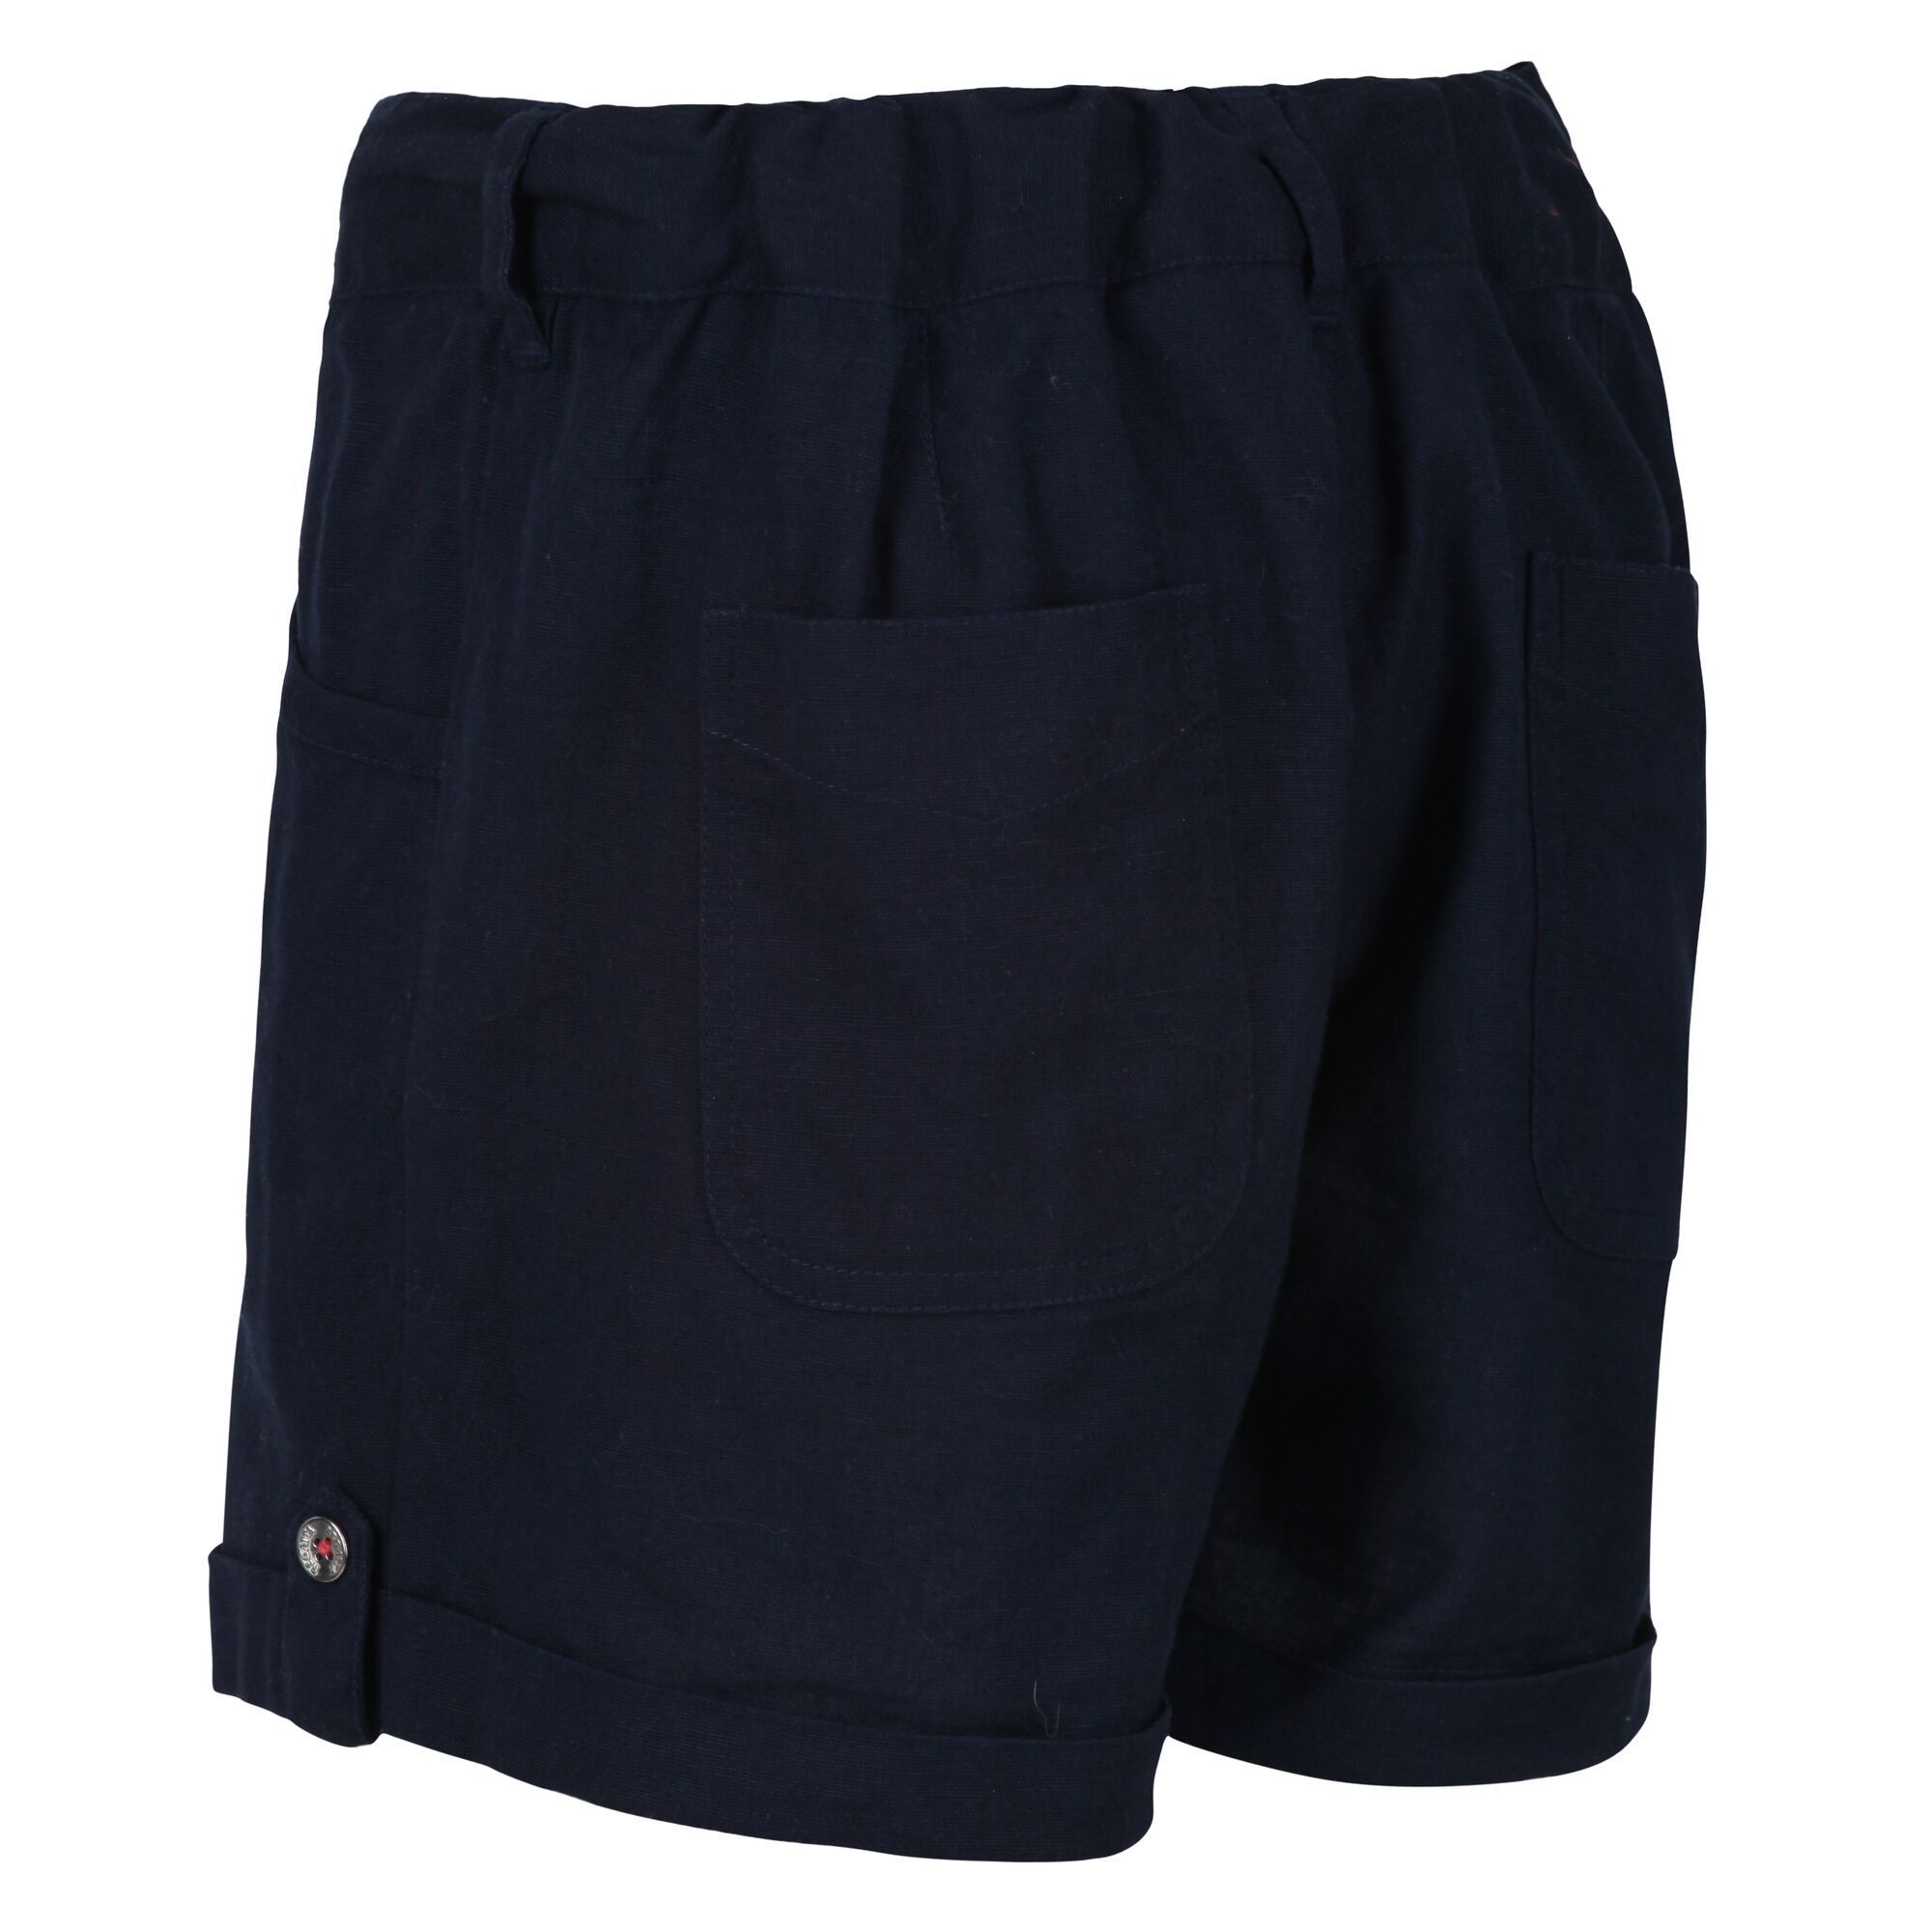 Material: 90% cotton, 10% linen. Loose fit design. Garment washed for softer handle. 2 side pockets. 2 back pockets.